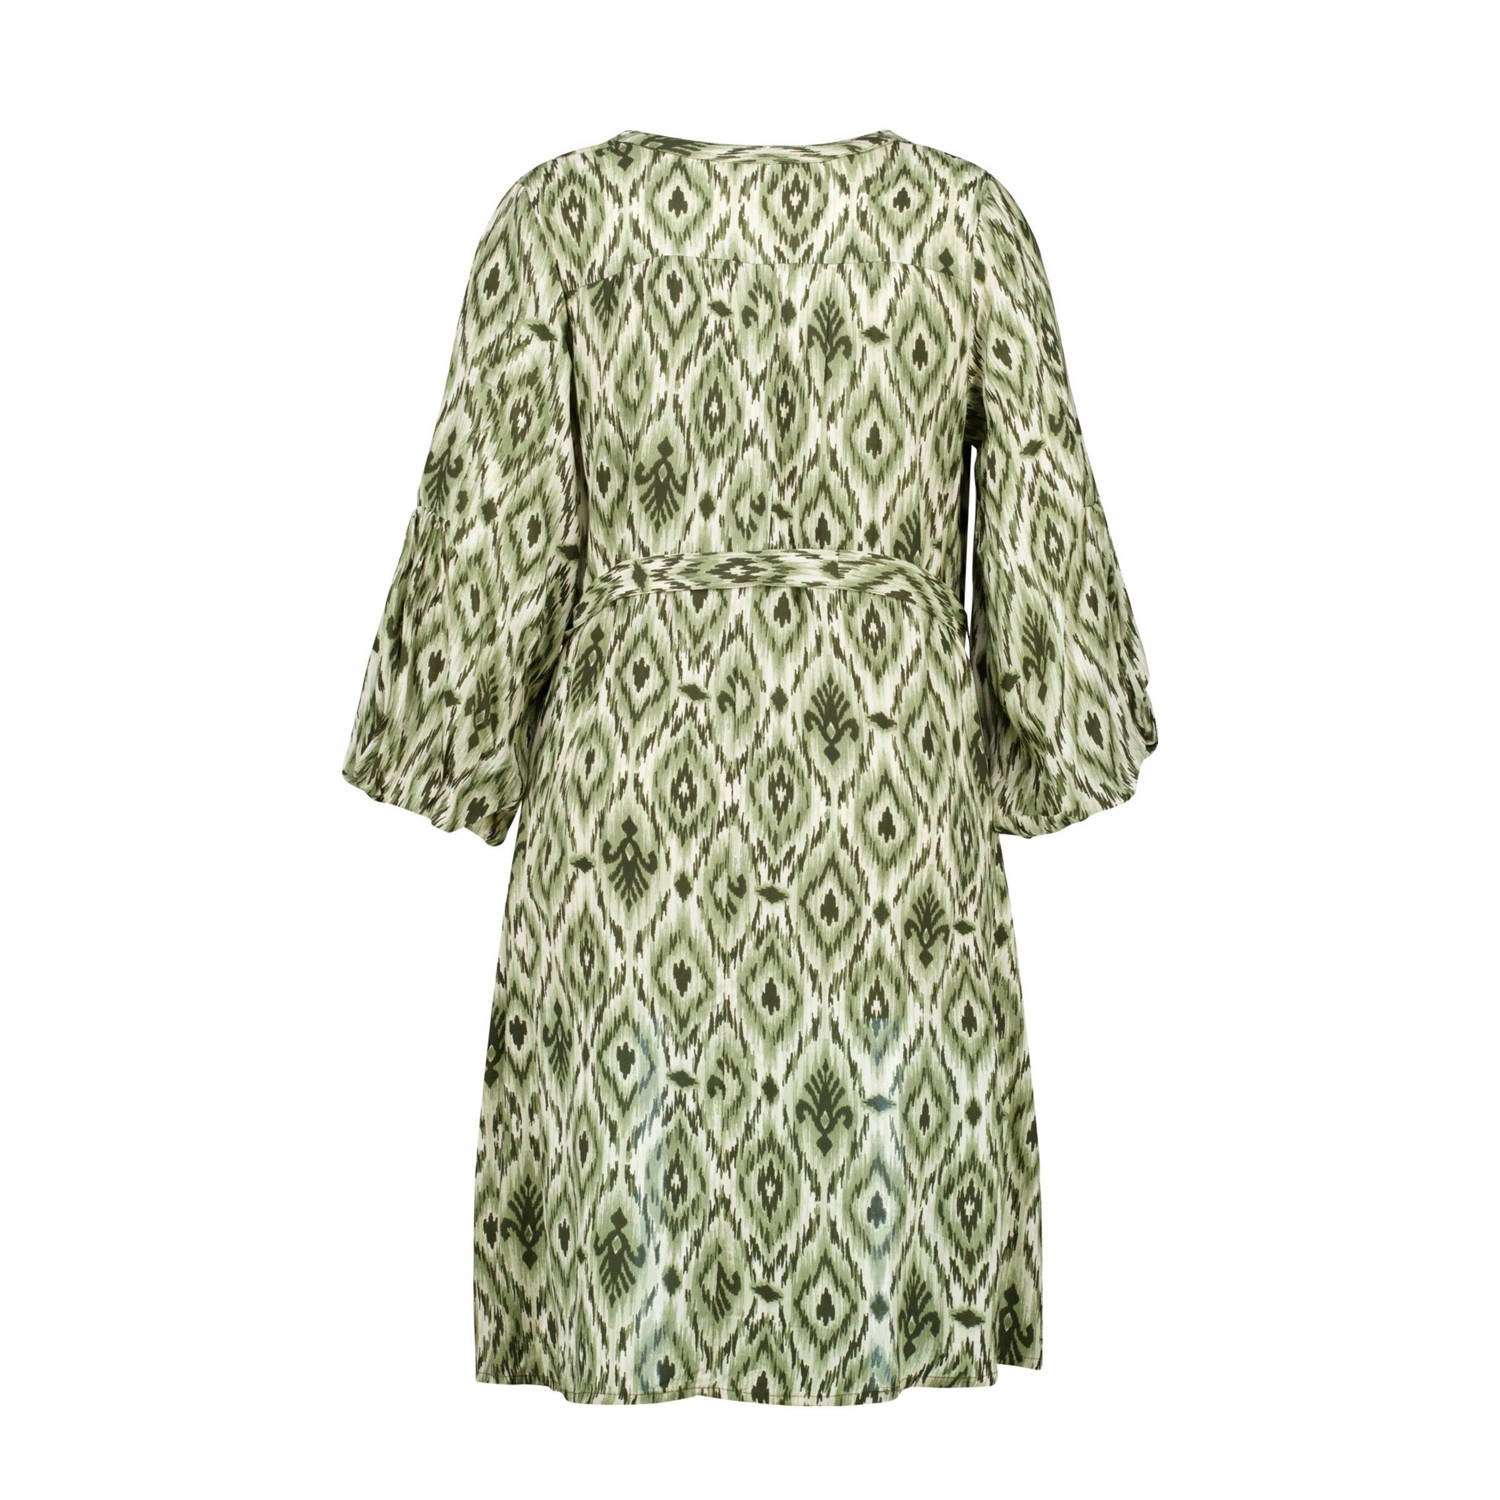 MS Mode jurk met all over print en ceintuur groen ecru